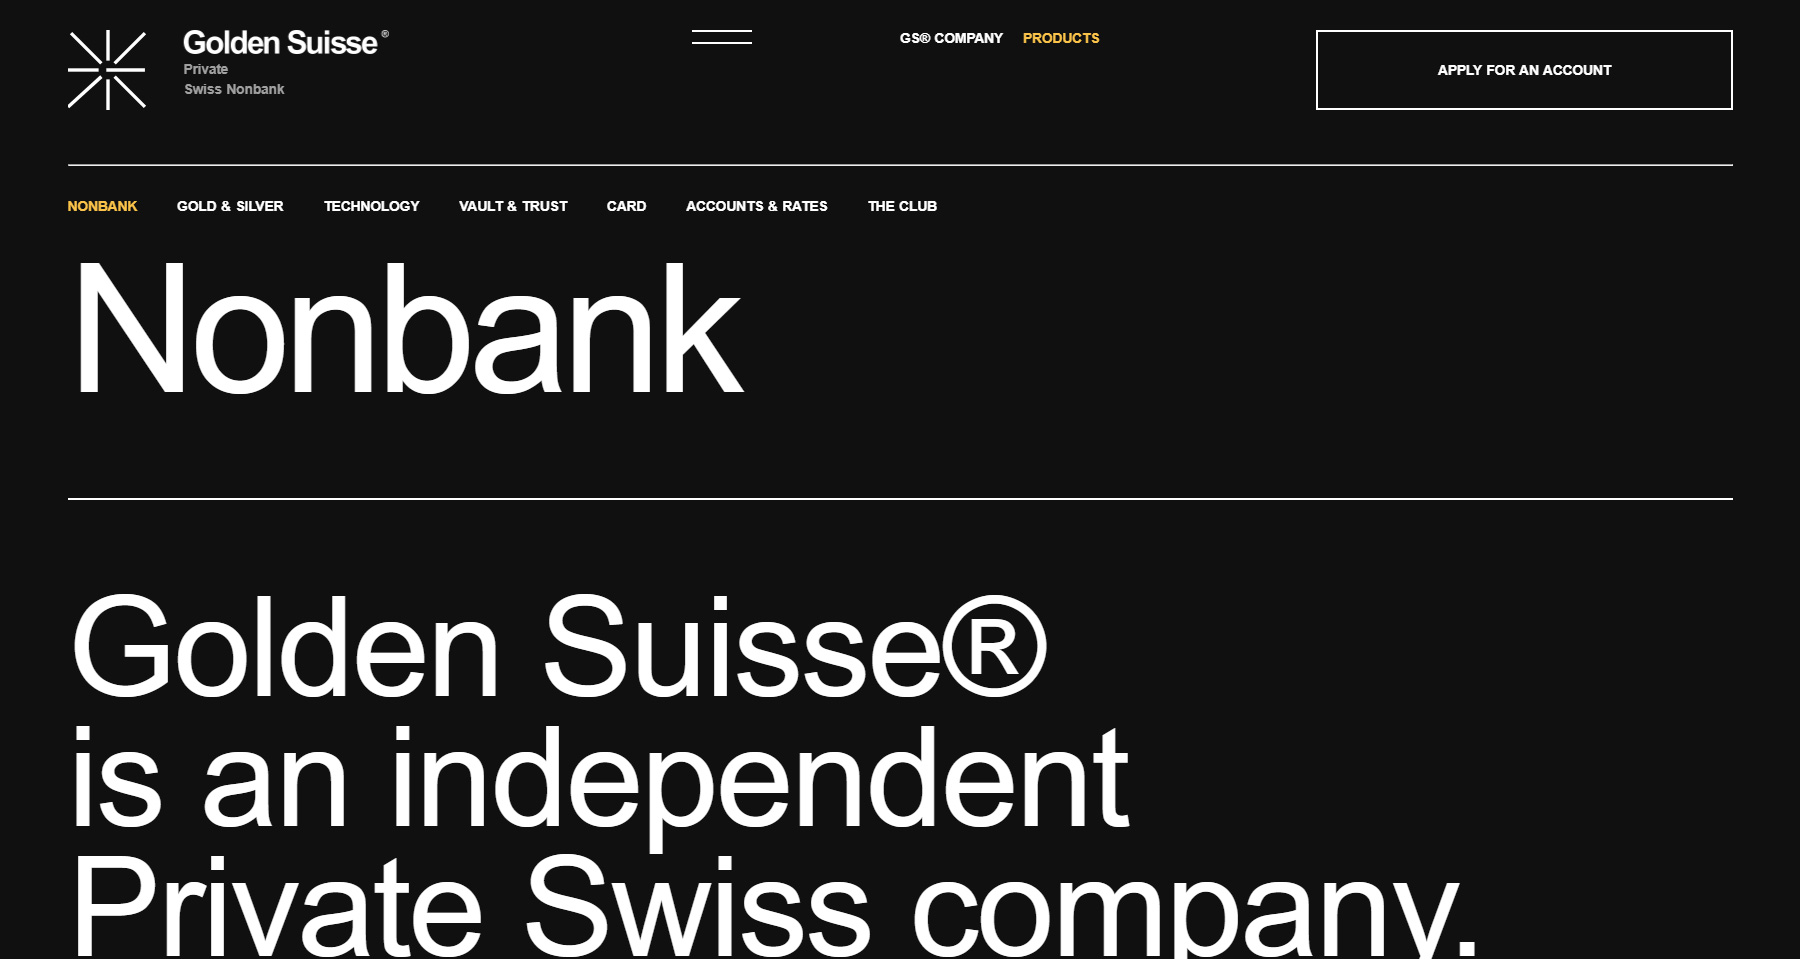 Golden Suisse - Website of the Day